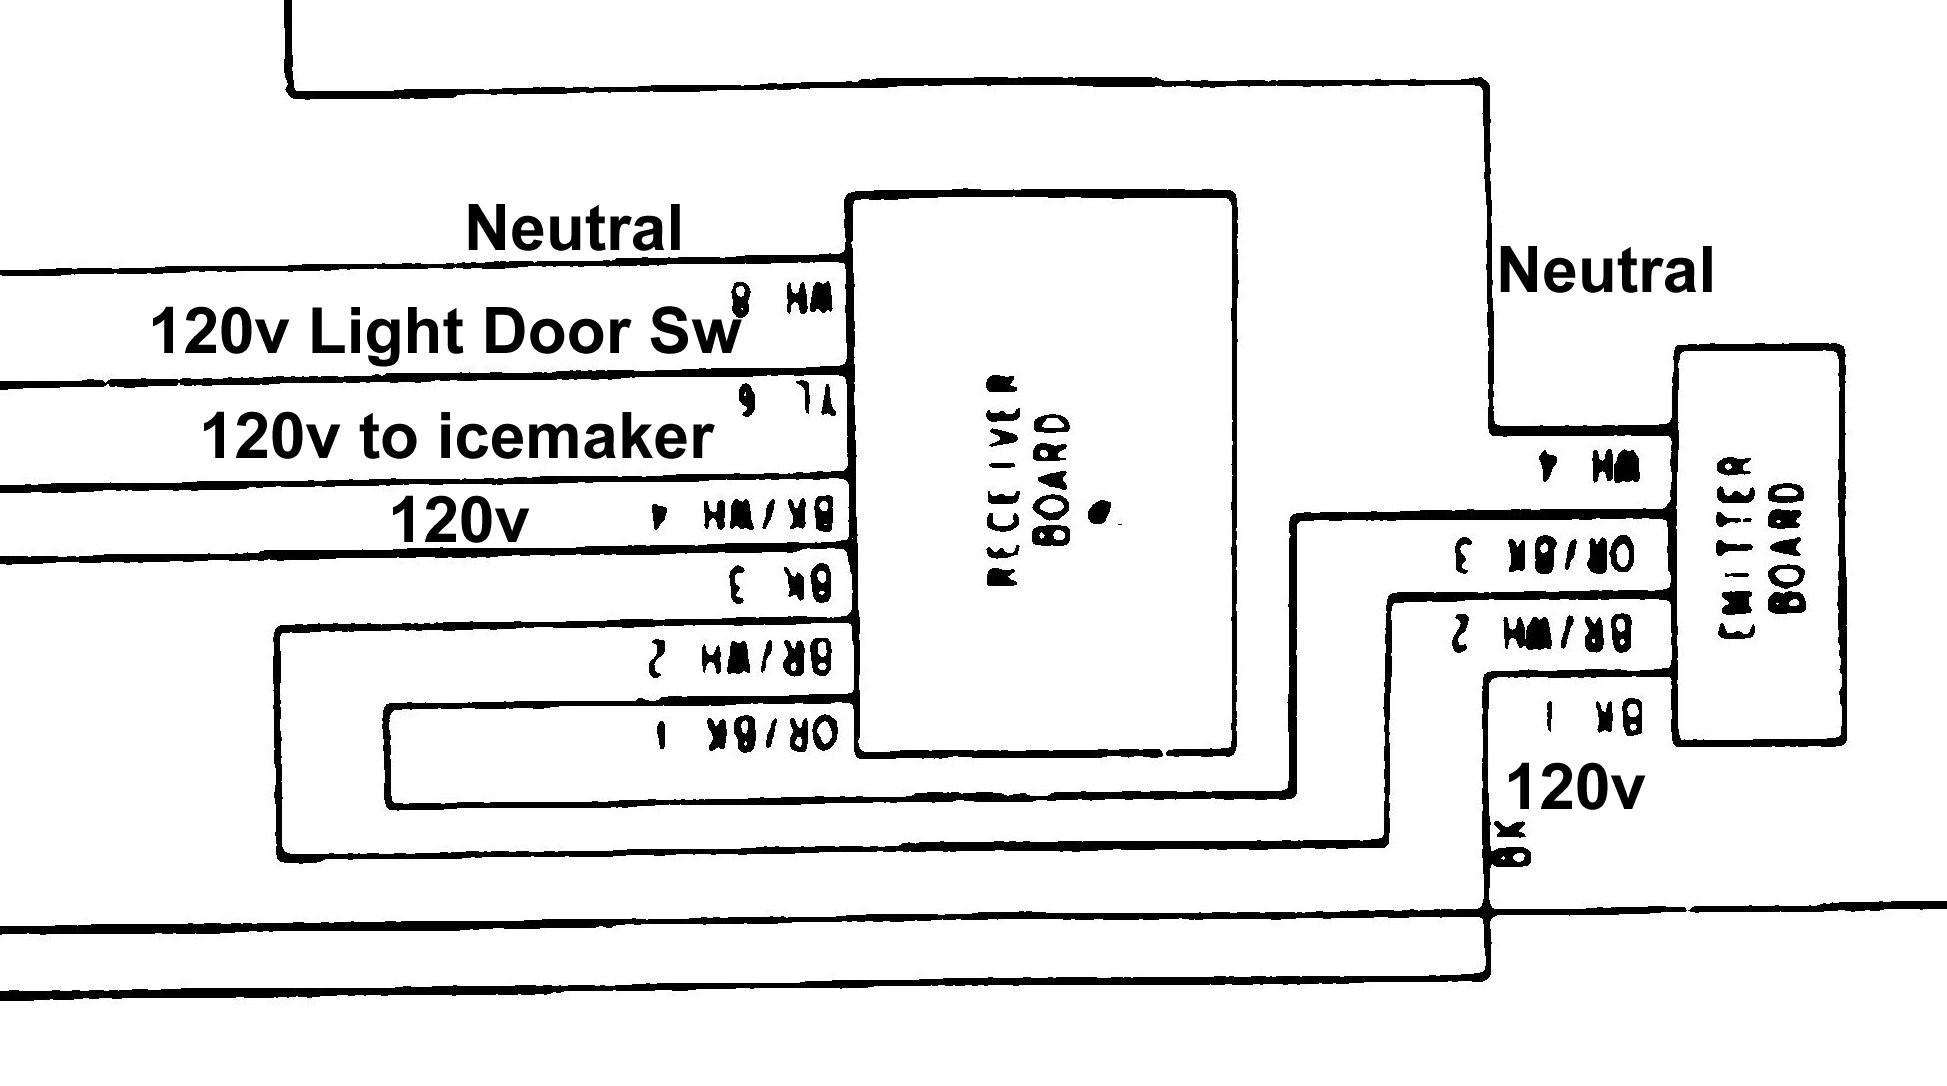 Wiring Diagram for Kitchenaid Ice Maker New Ge Refrigerator Wiring Diagram Ice Maker Best Whirlpool 20fridge